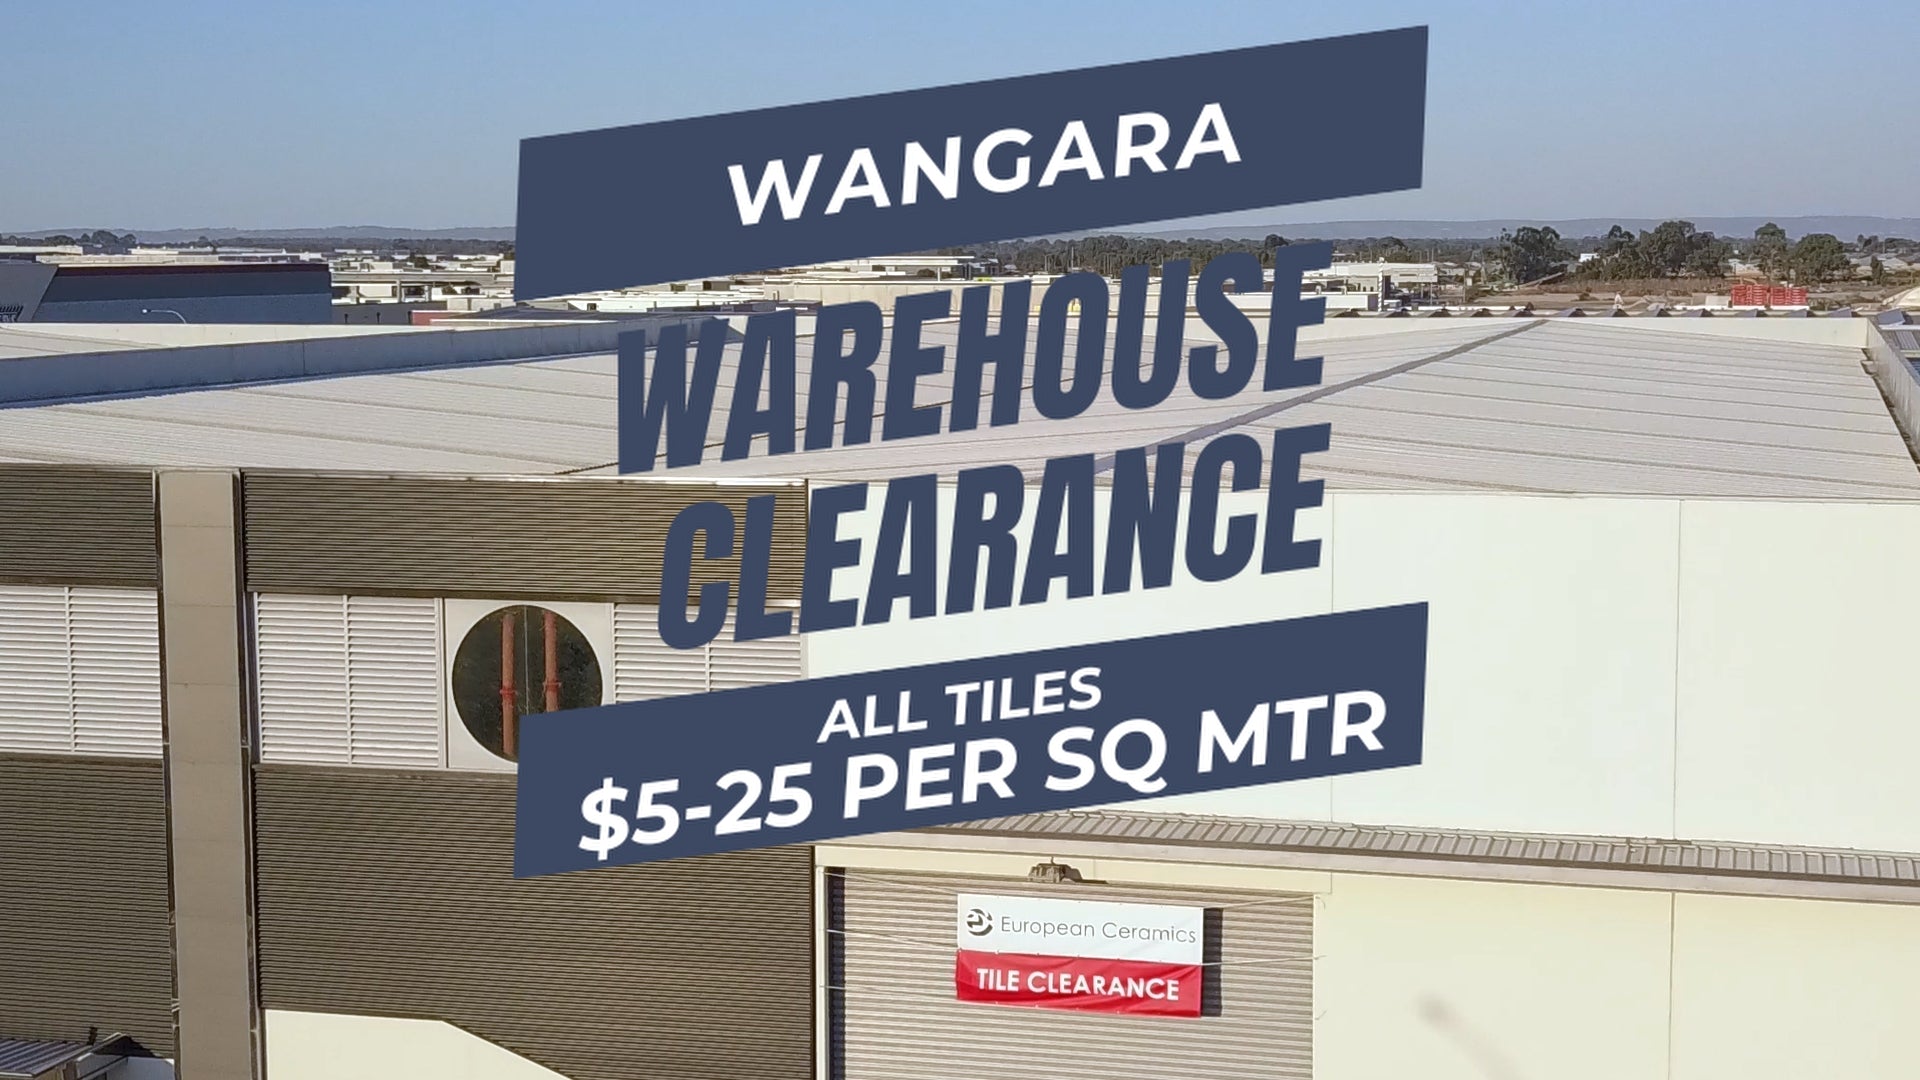 Load video: European Ceramics Wangara Warehouse Clearance video ad